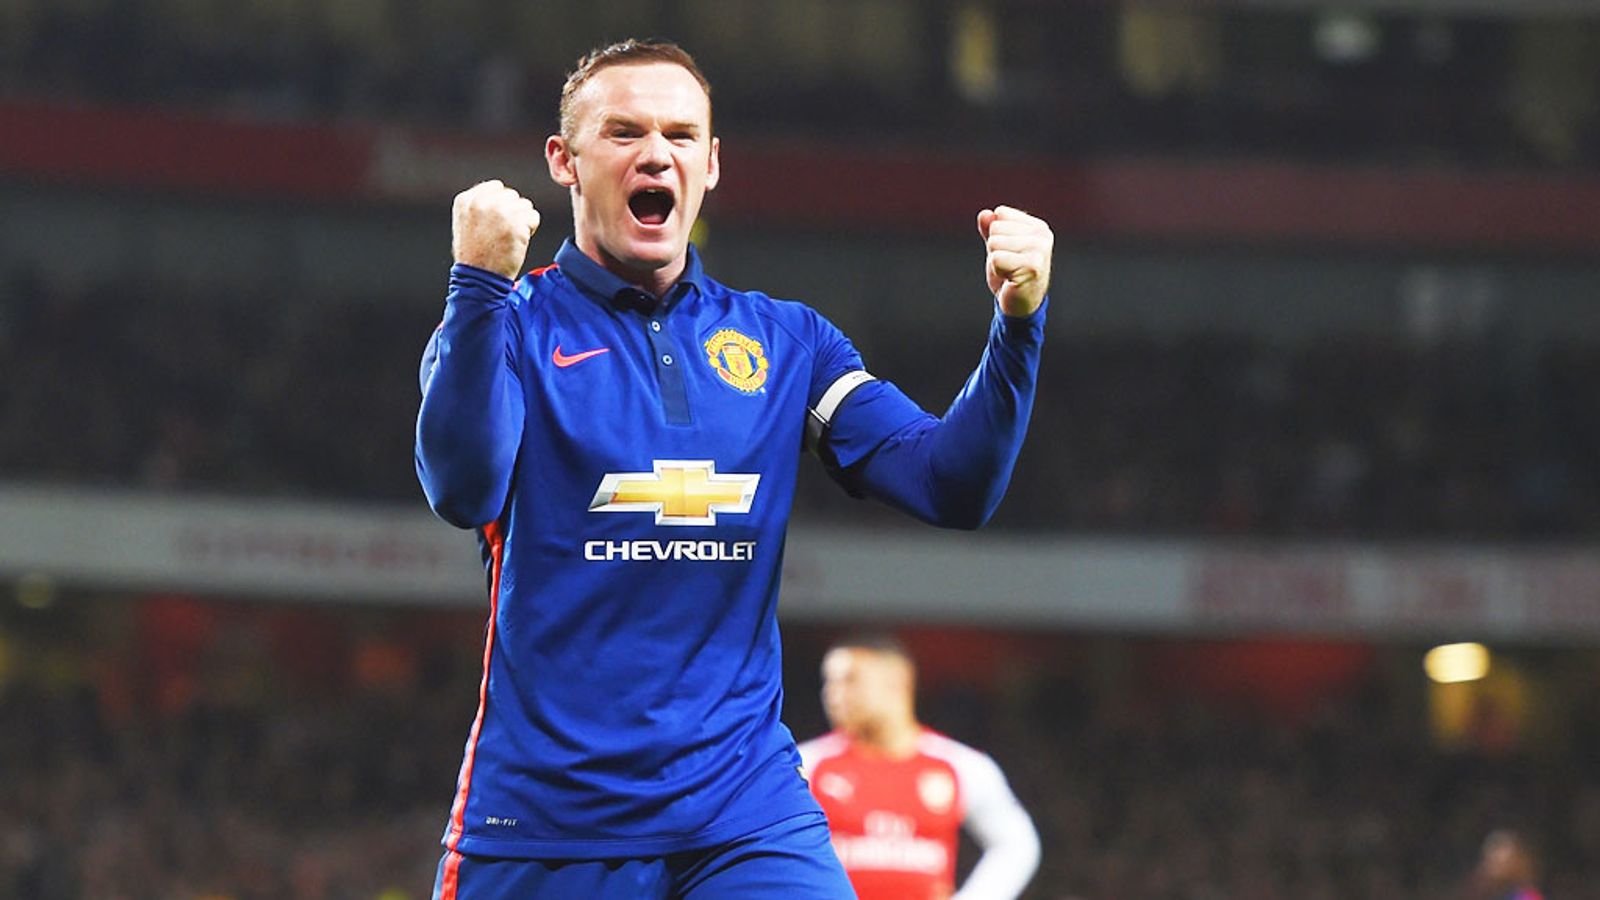 Wayne Rooney reckons Manchester United's win at Arsenal may be a